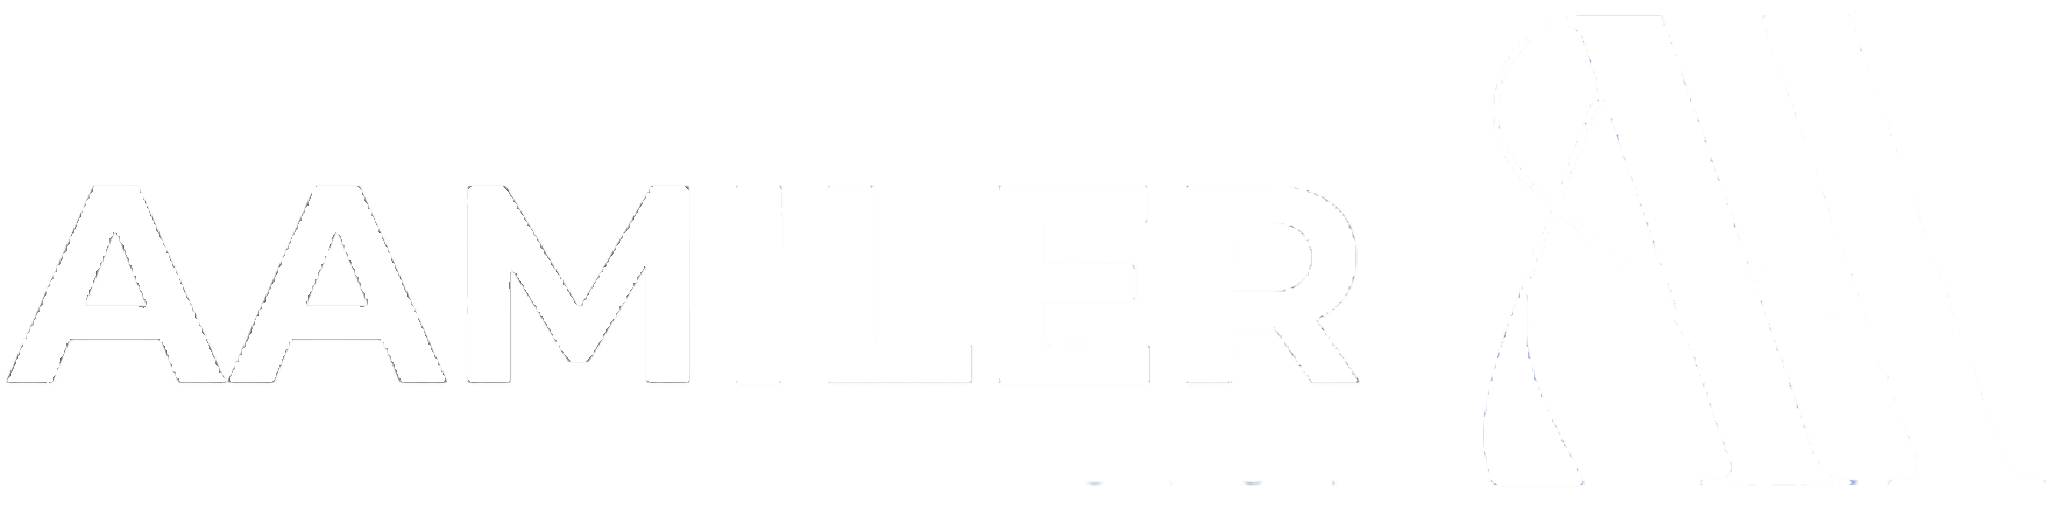 aamiler_logo